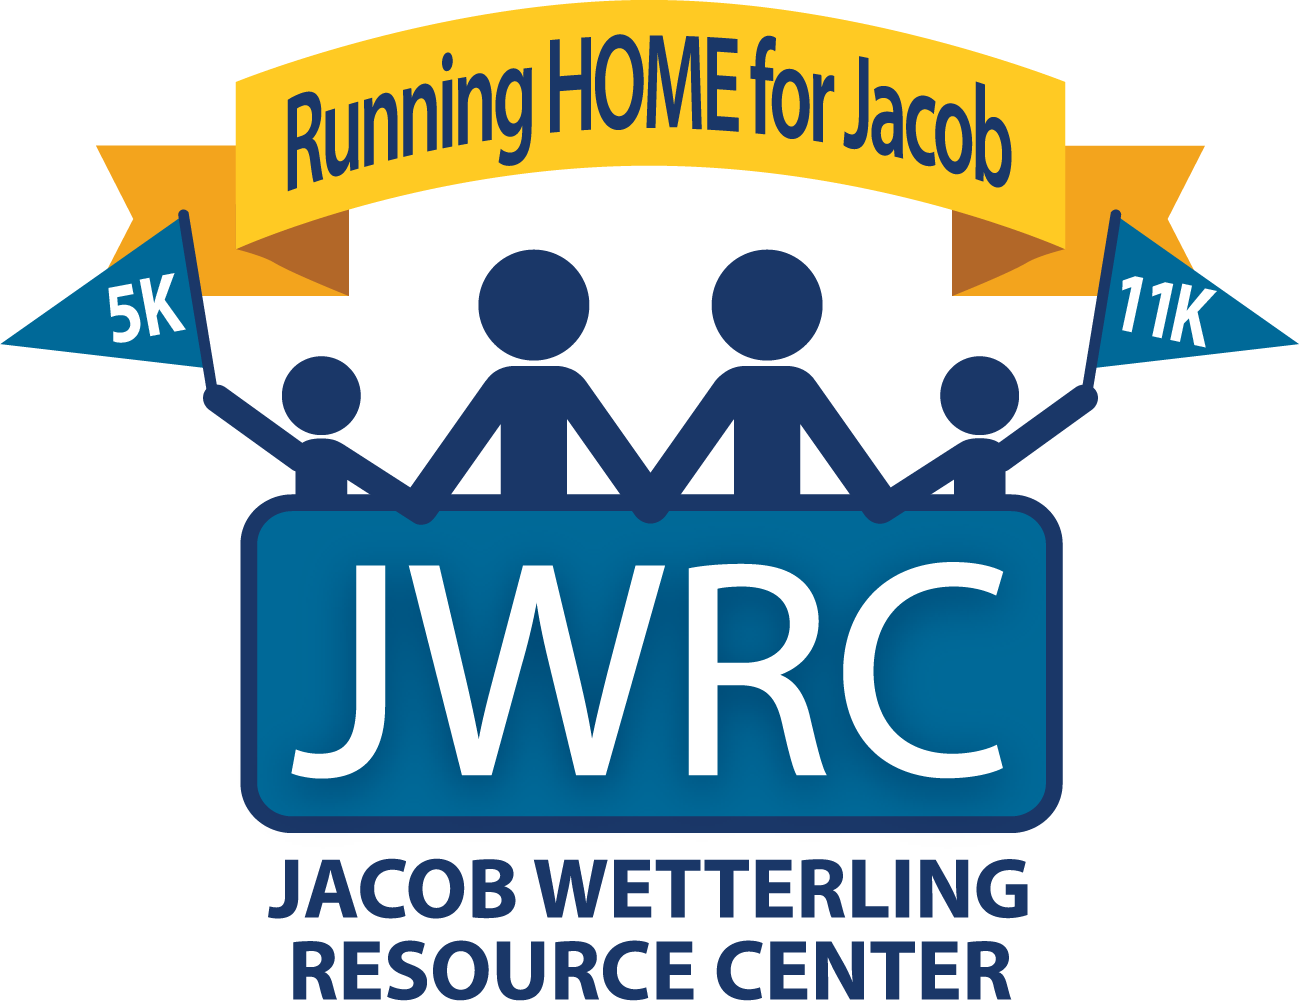 JWRC_RunningHOME_logo